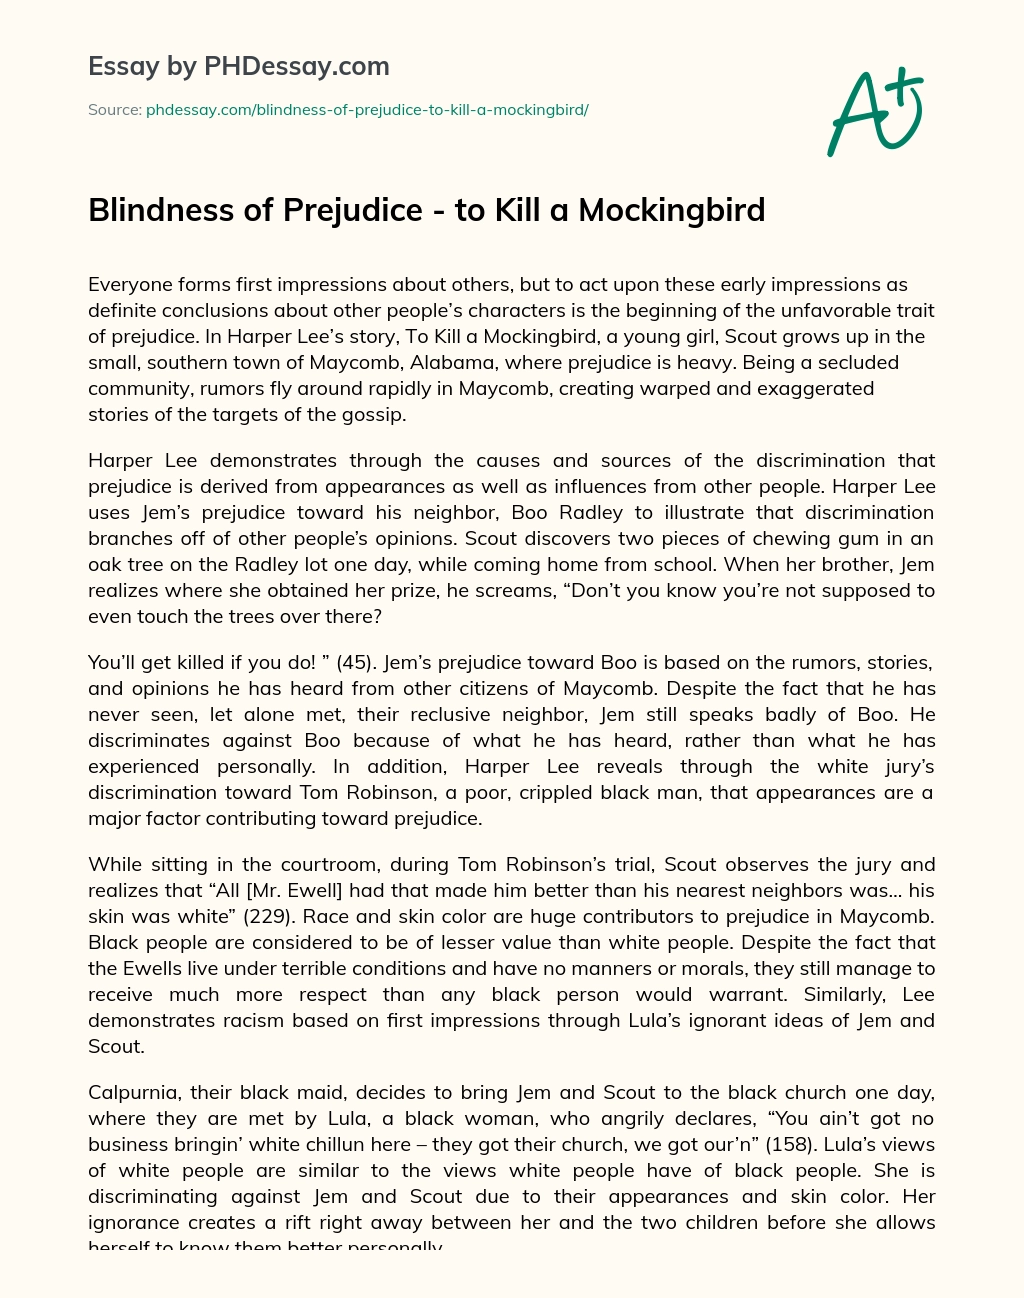 to kill a mockingbird essay about prejudice